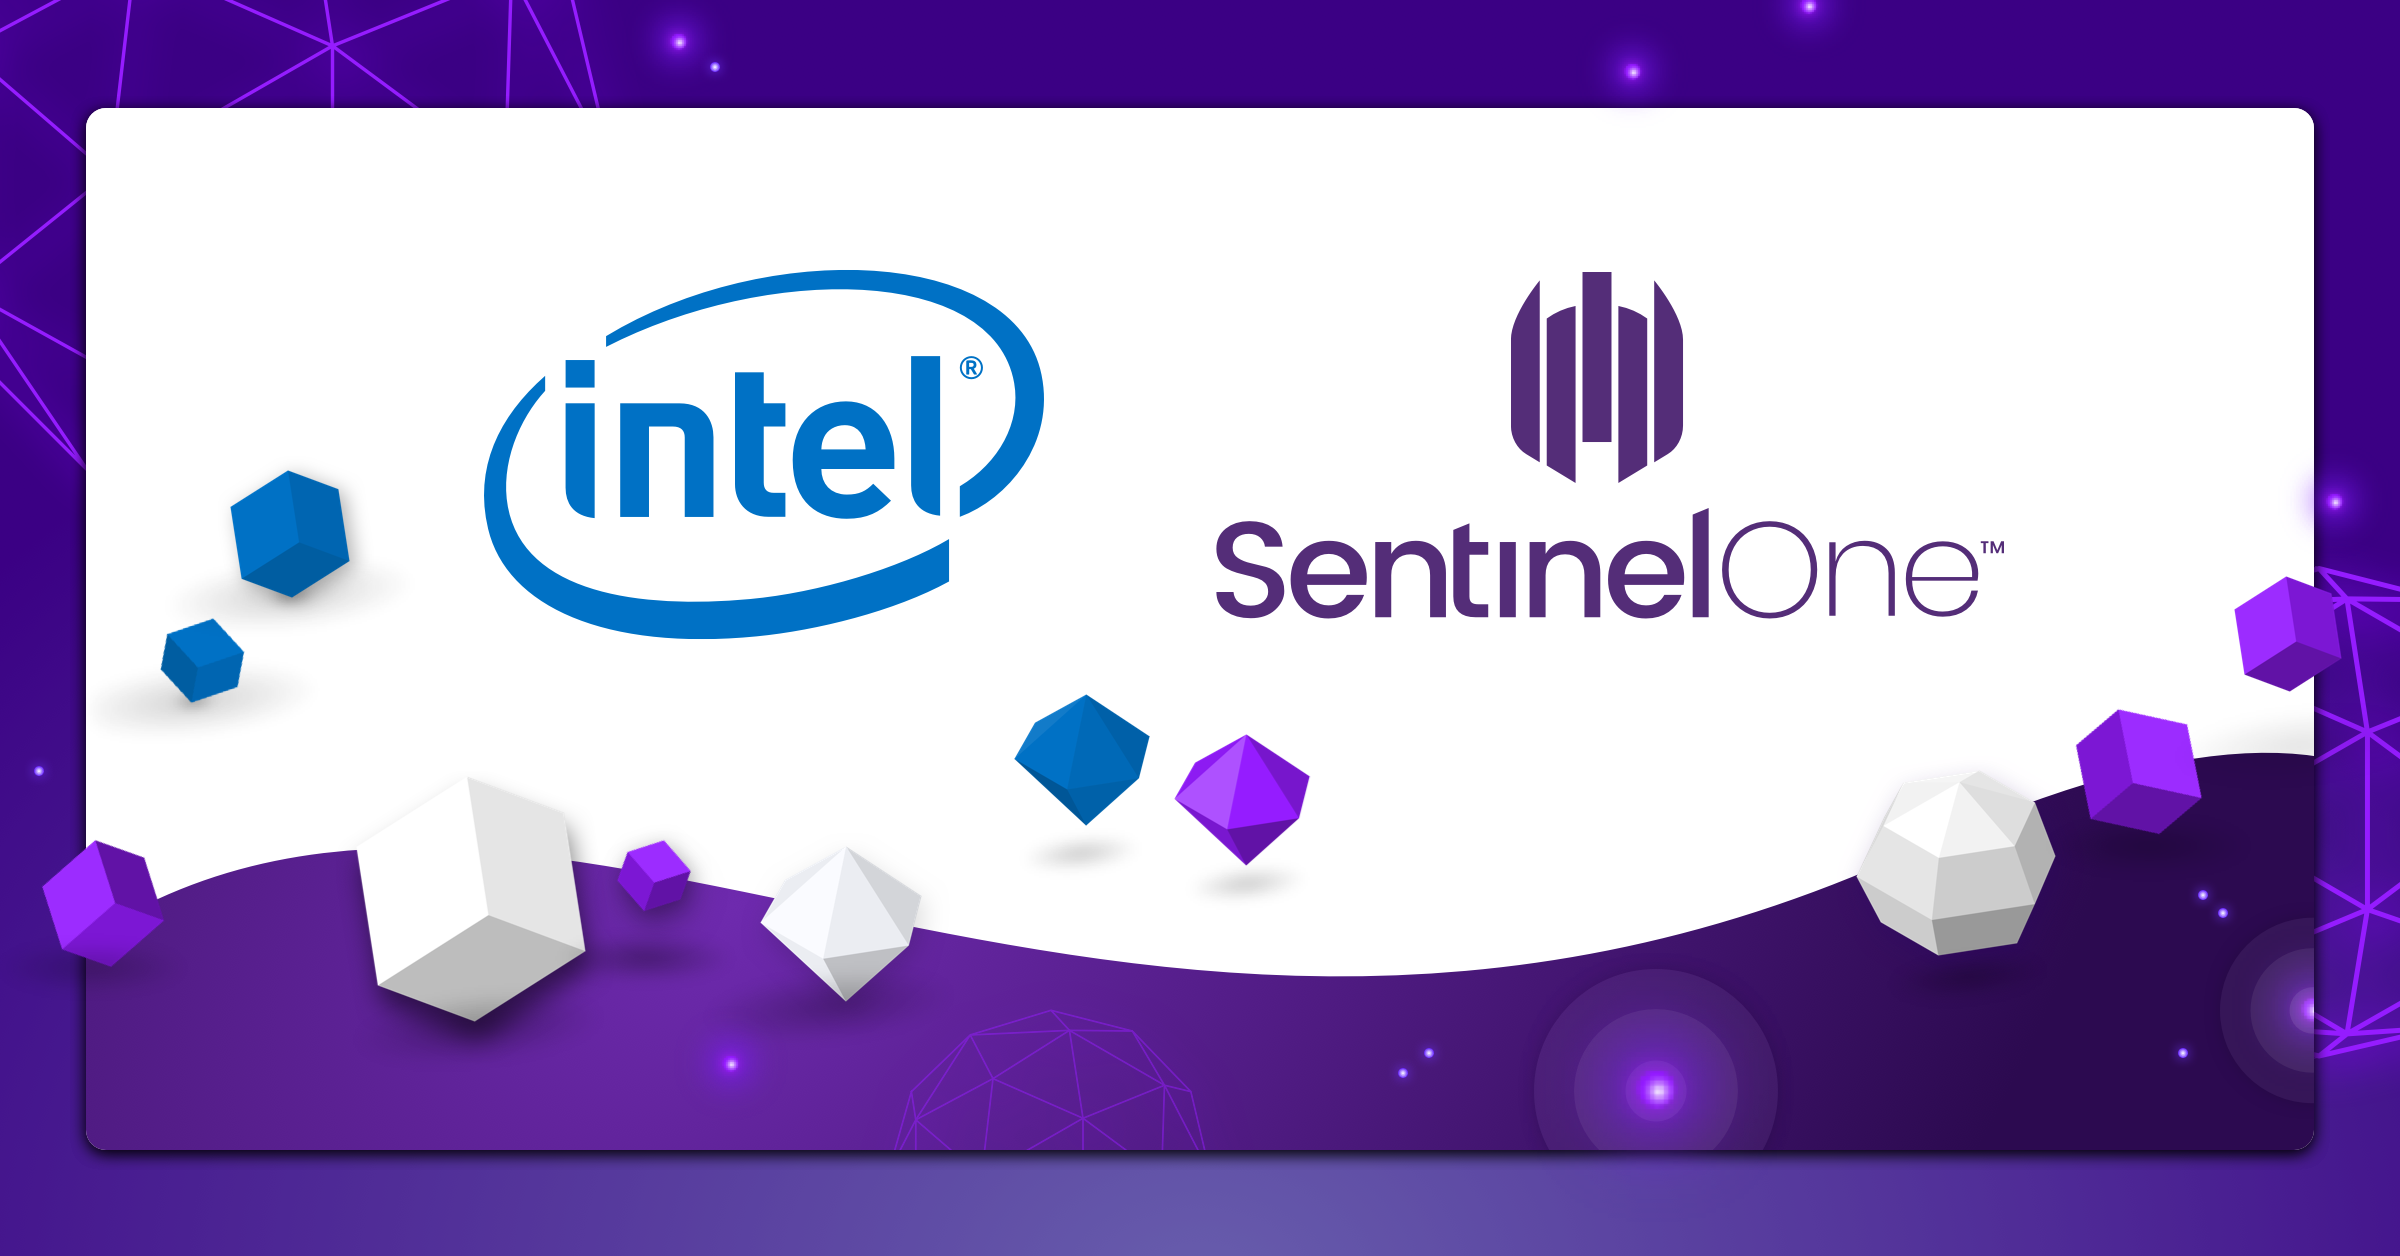 Intel and SentinelOne Integration